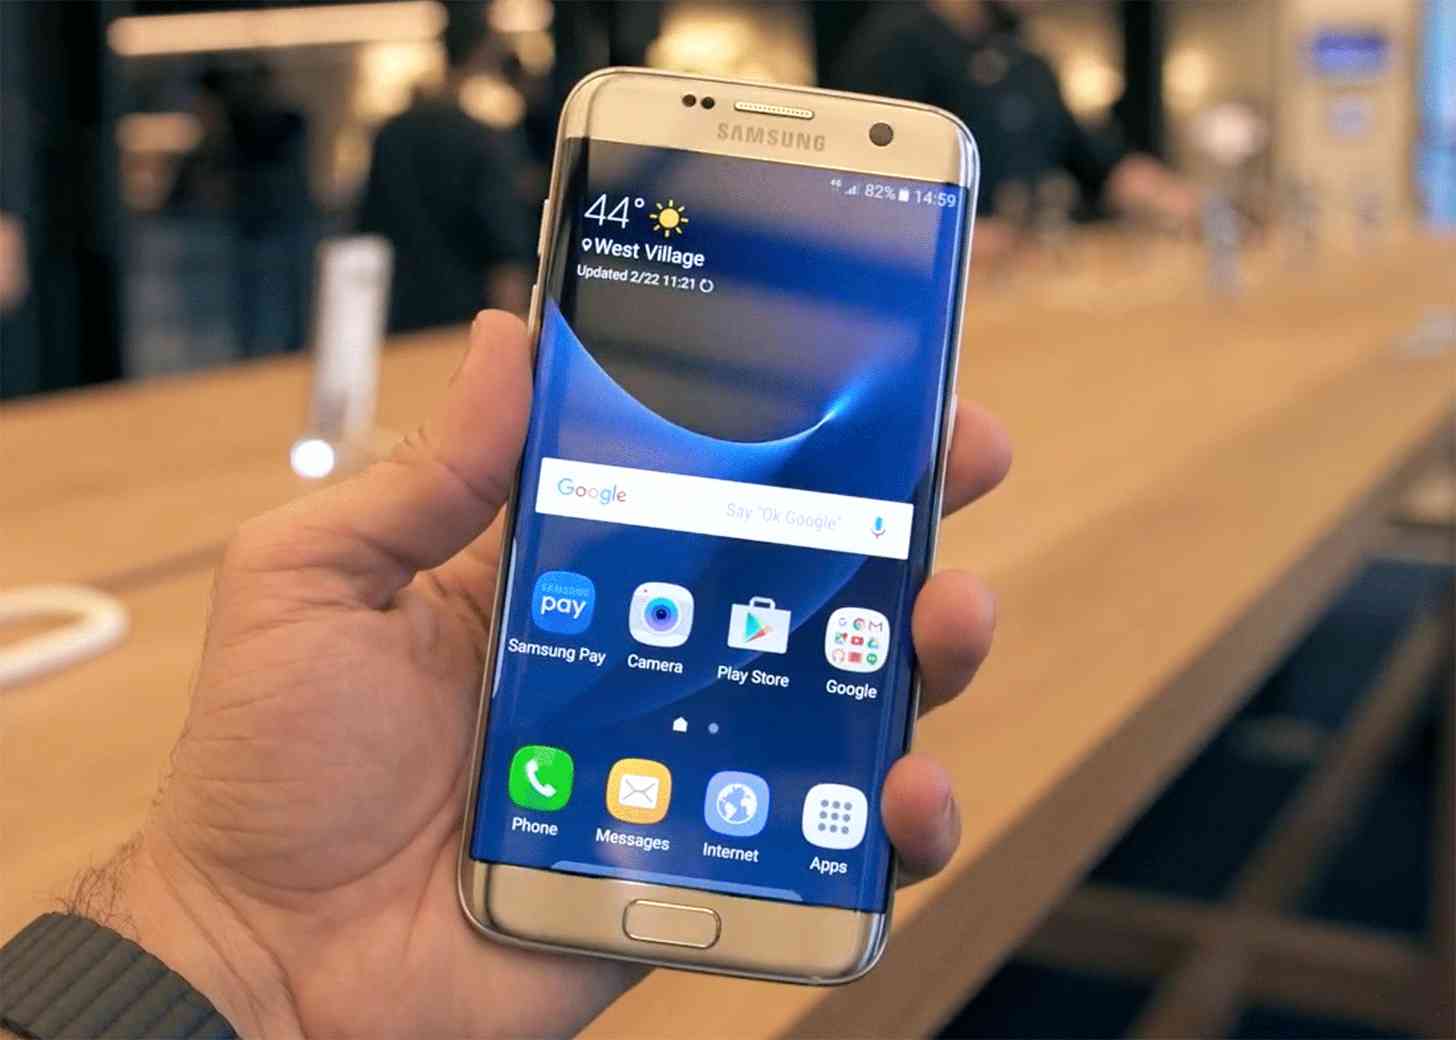 Samsung Galaxy S7 edge hands on